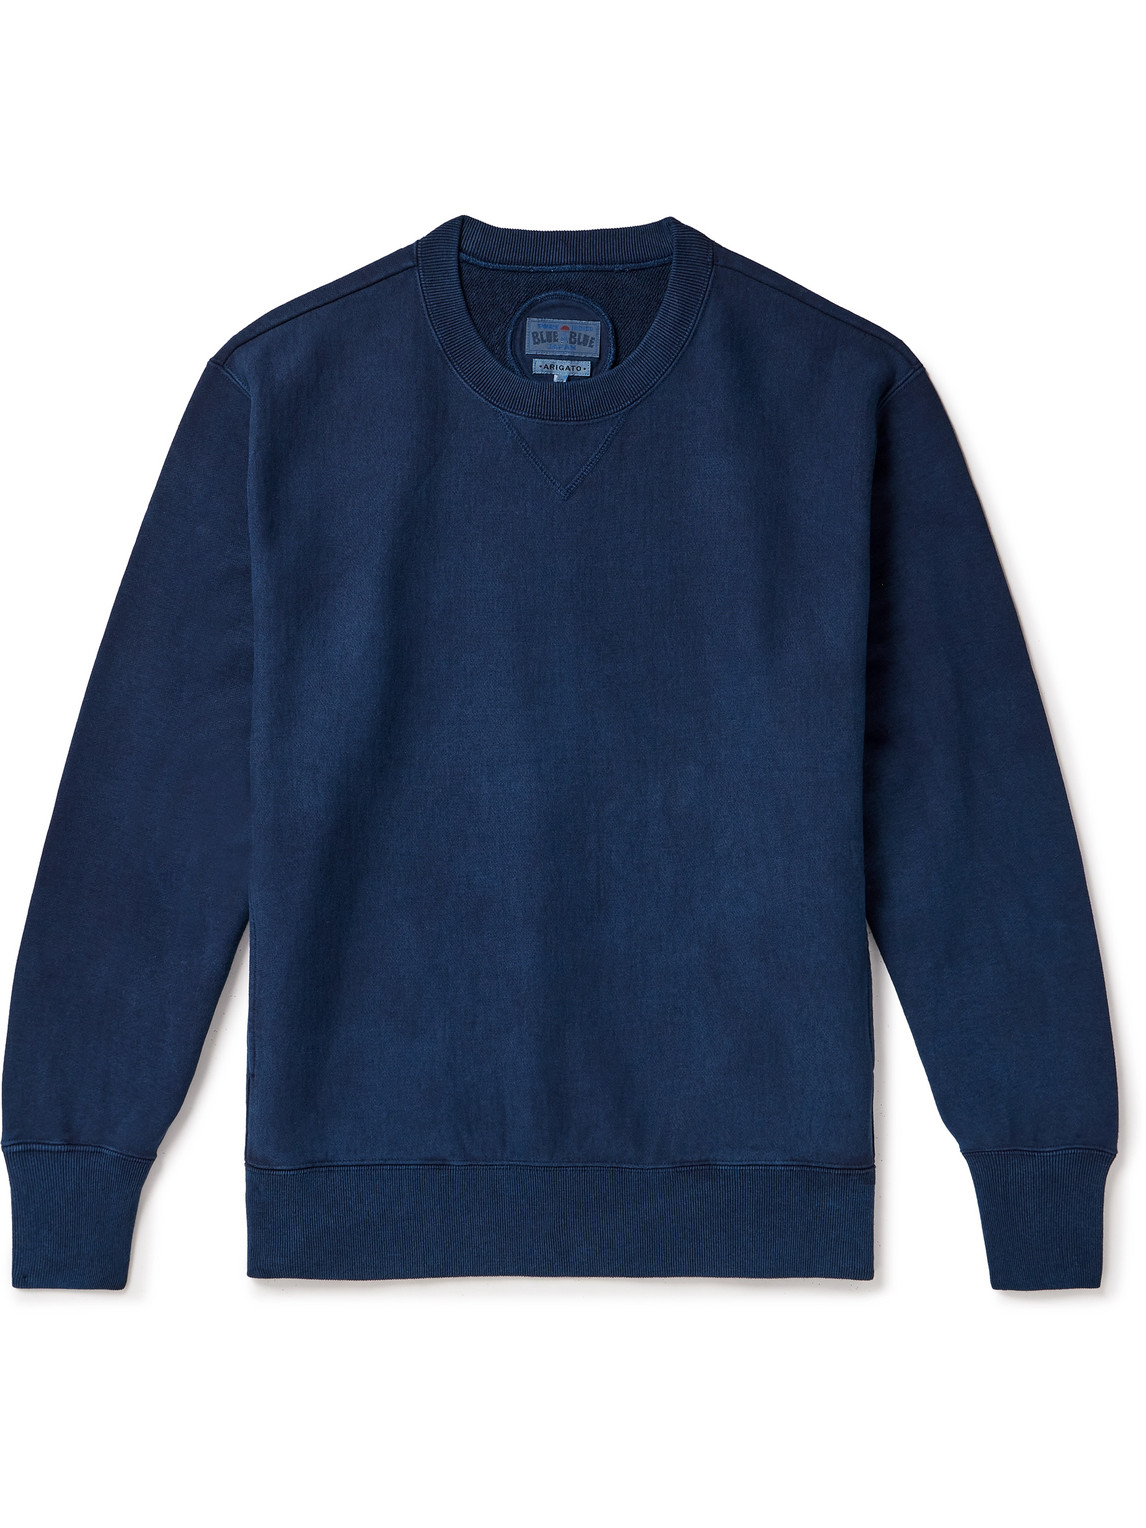 Blue Blue Japan - Indigo-Dyed Cotton-Jersey Sweatshirt - Men - Blue - L von Blue Blue Japan